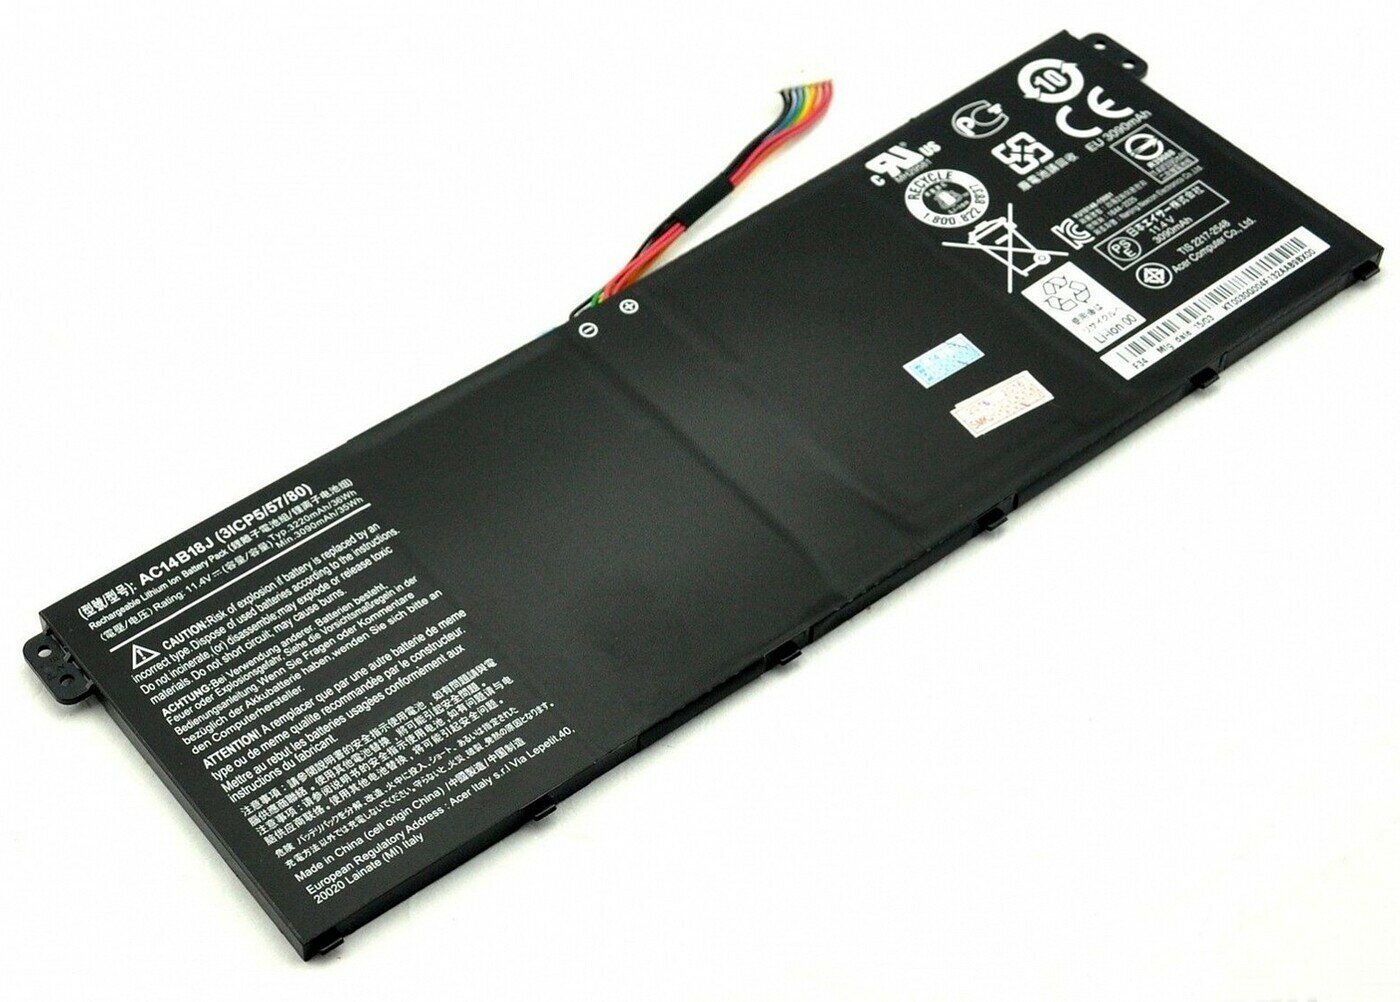 Аккумулятор для ноутбука Acer 731 A517-51P 771 Aspire E3-111 (11.4V 2200mAh) P/N: 3ICP5/57/80 AC14B13J AC14B8K KT.0040G.004